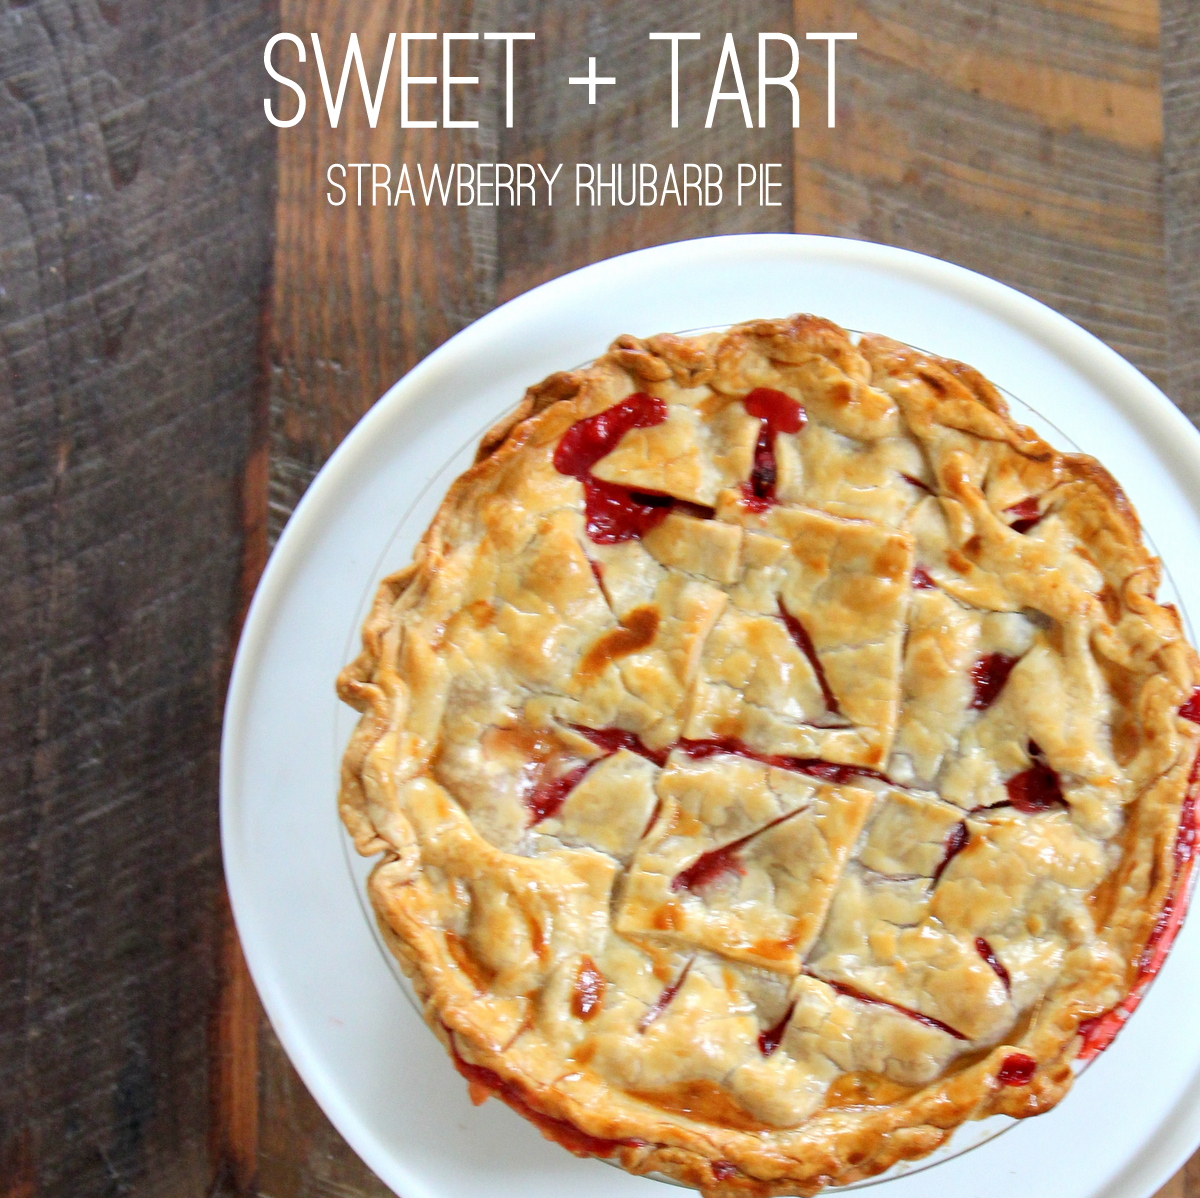 sweet + tart- strawberry rhubarb pie recipe by kojodesigns